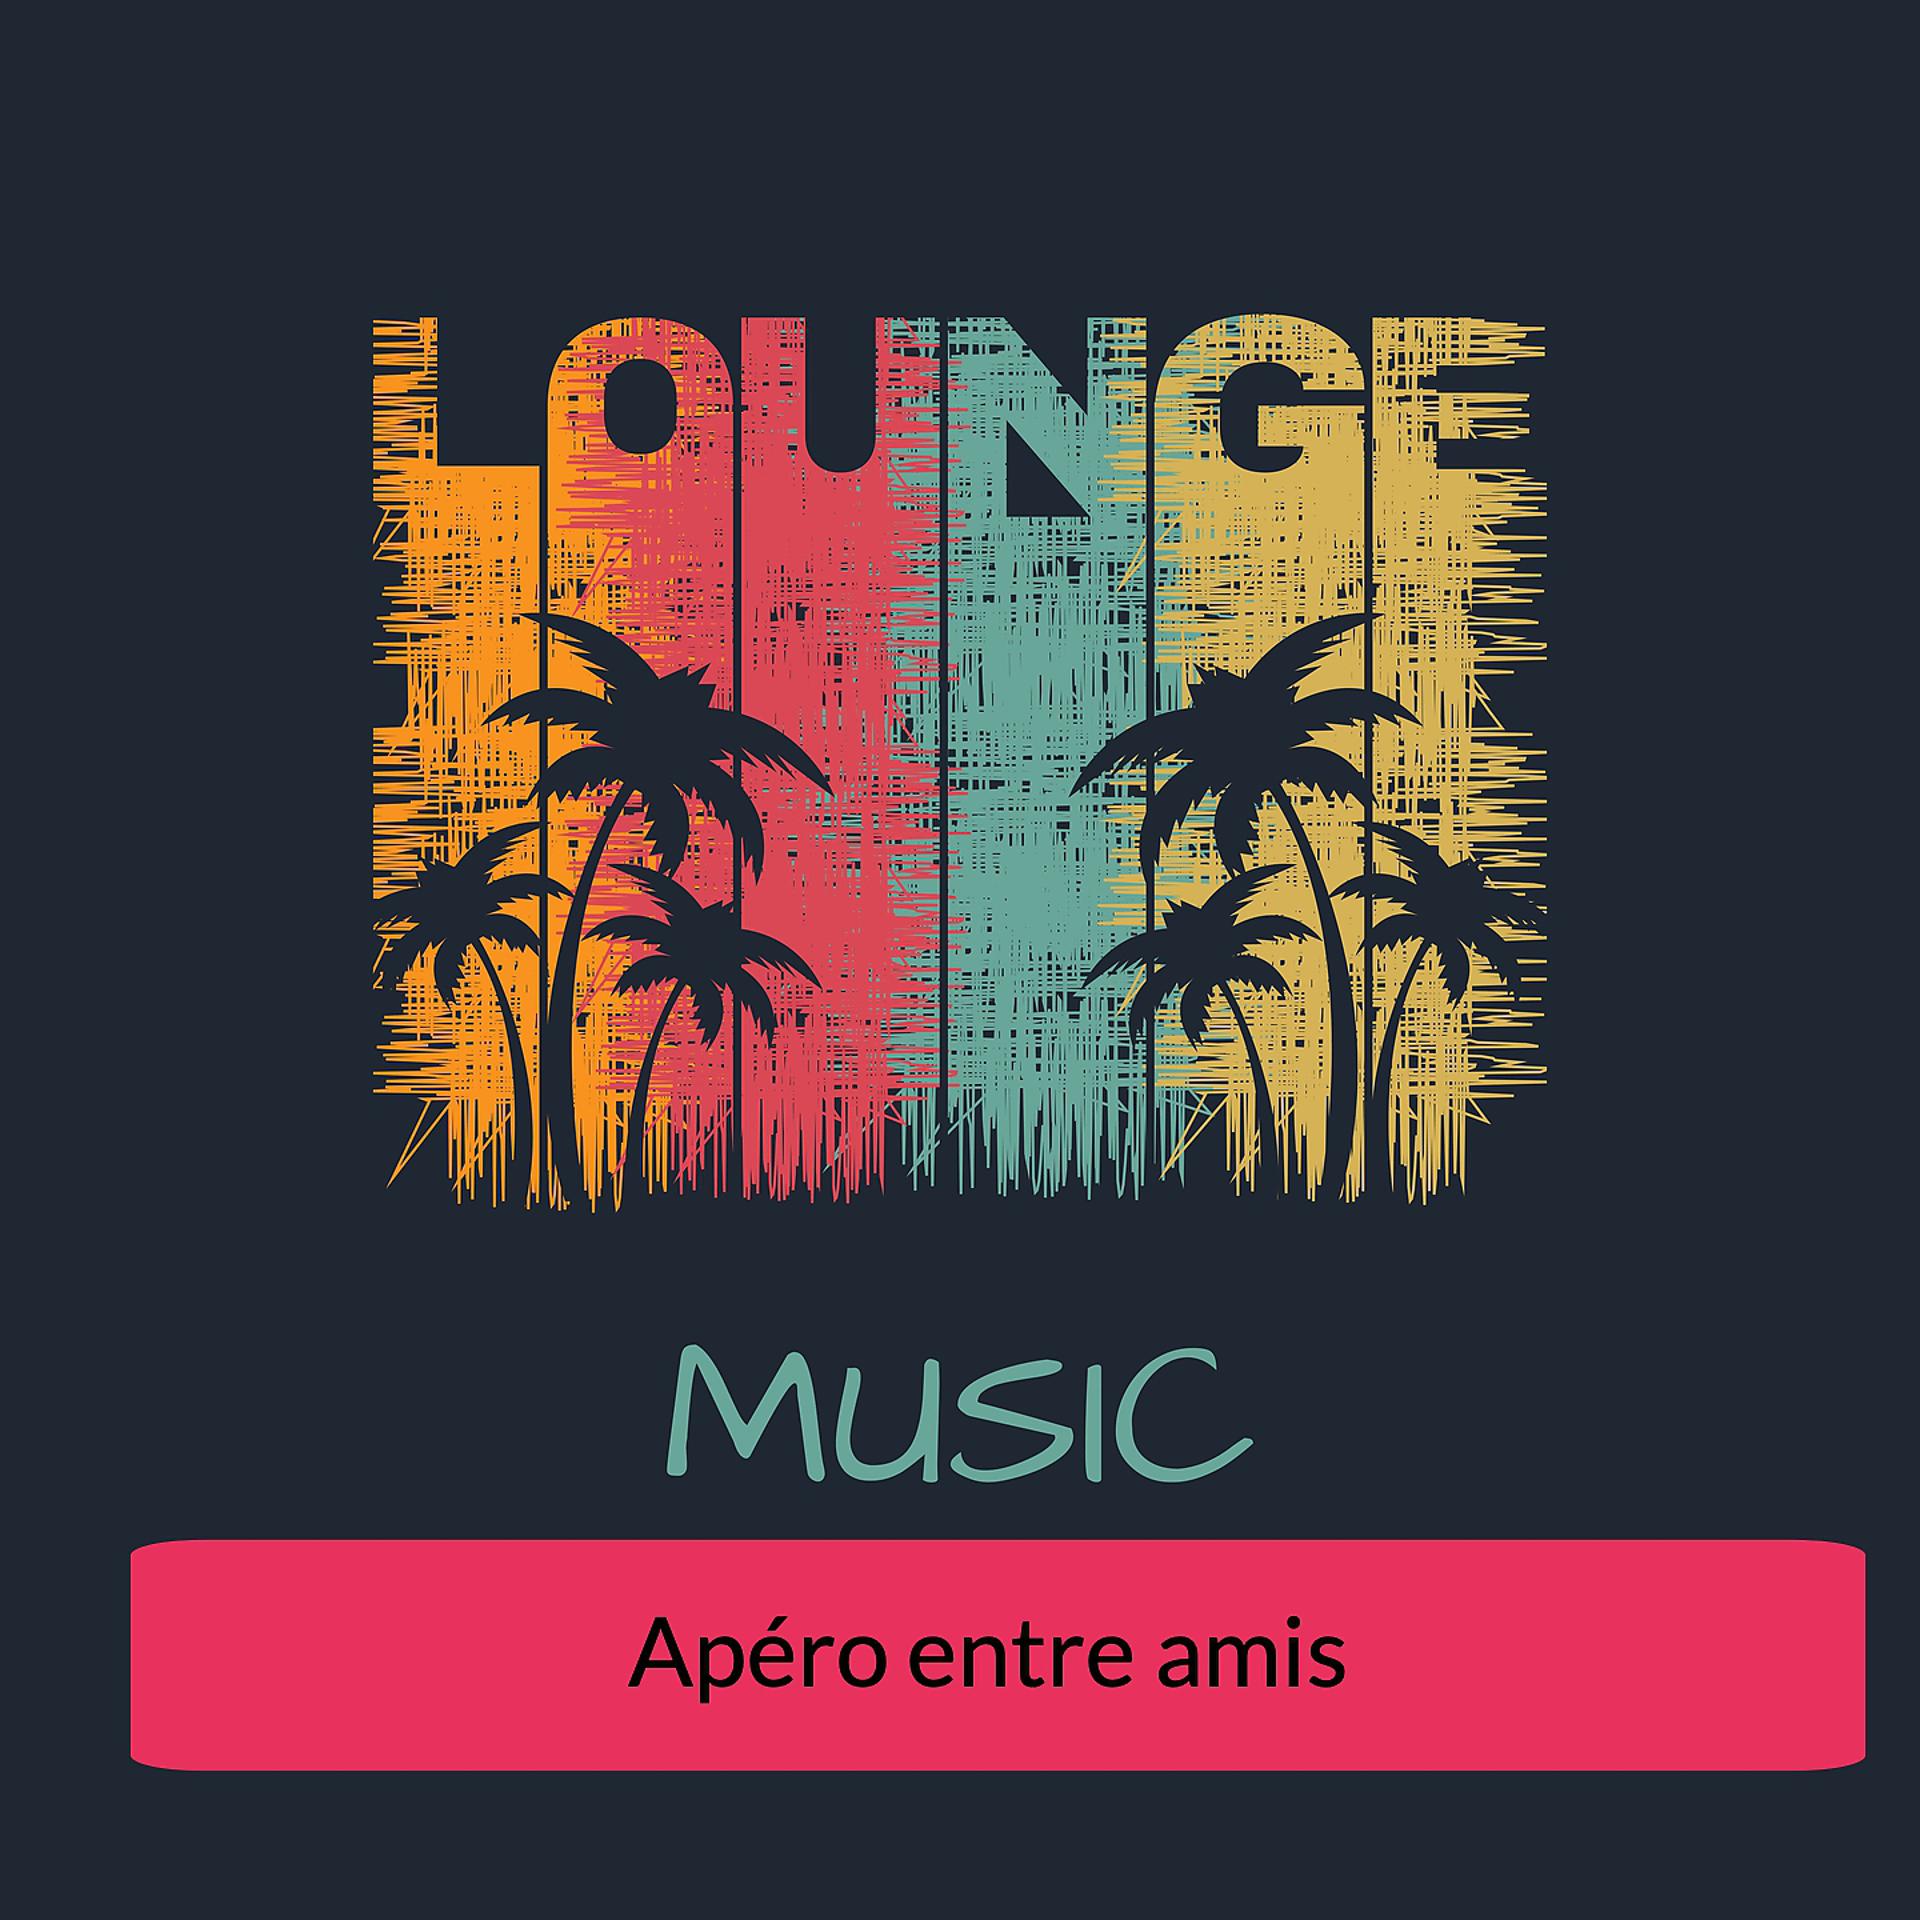 Постер альбома Lounge Music